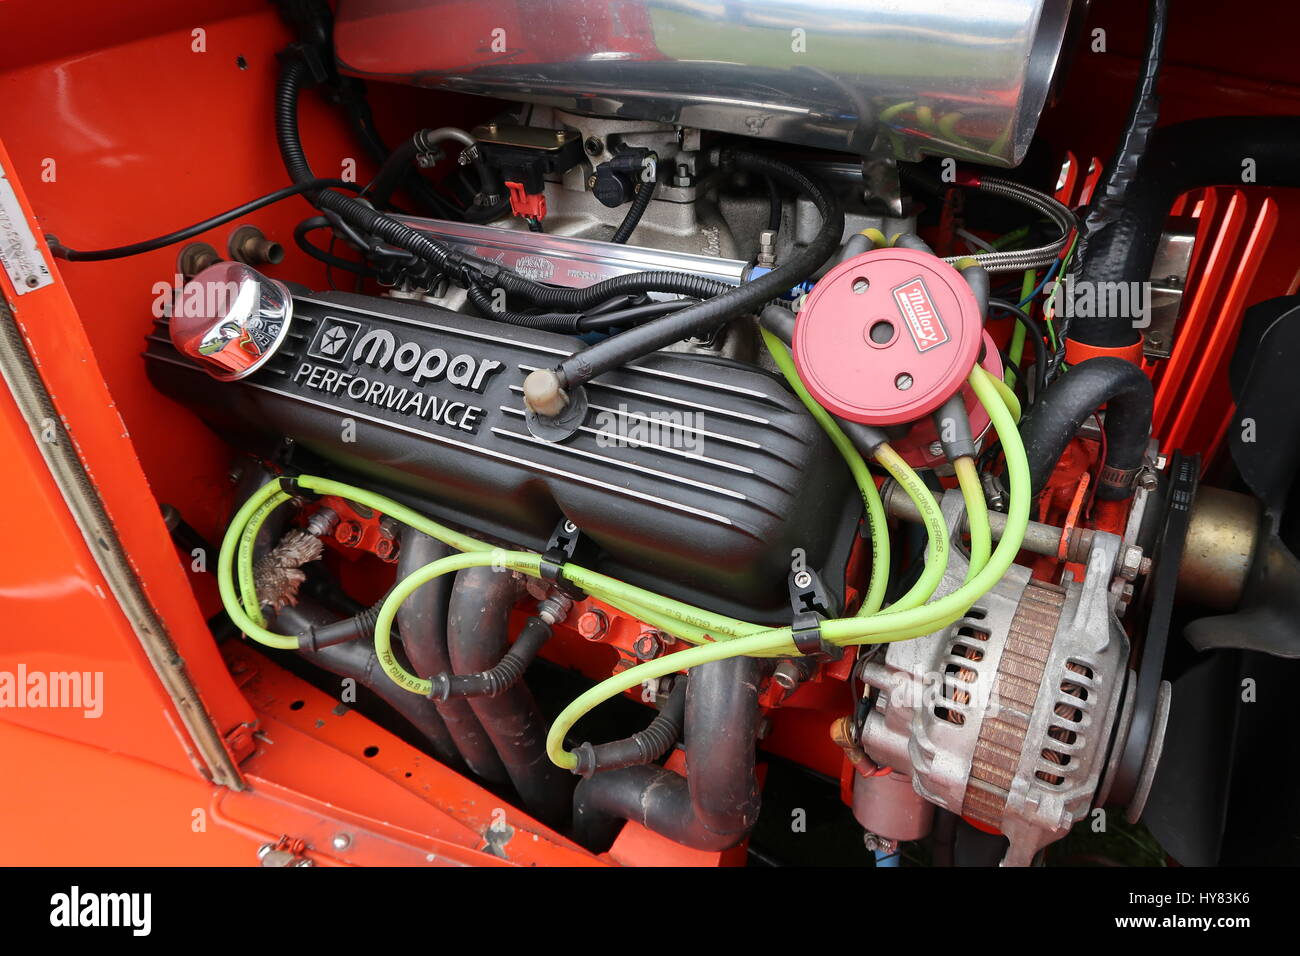 Mopar V8 engine in restored car Stock Photo - Alamy